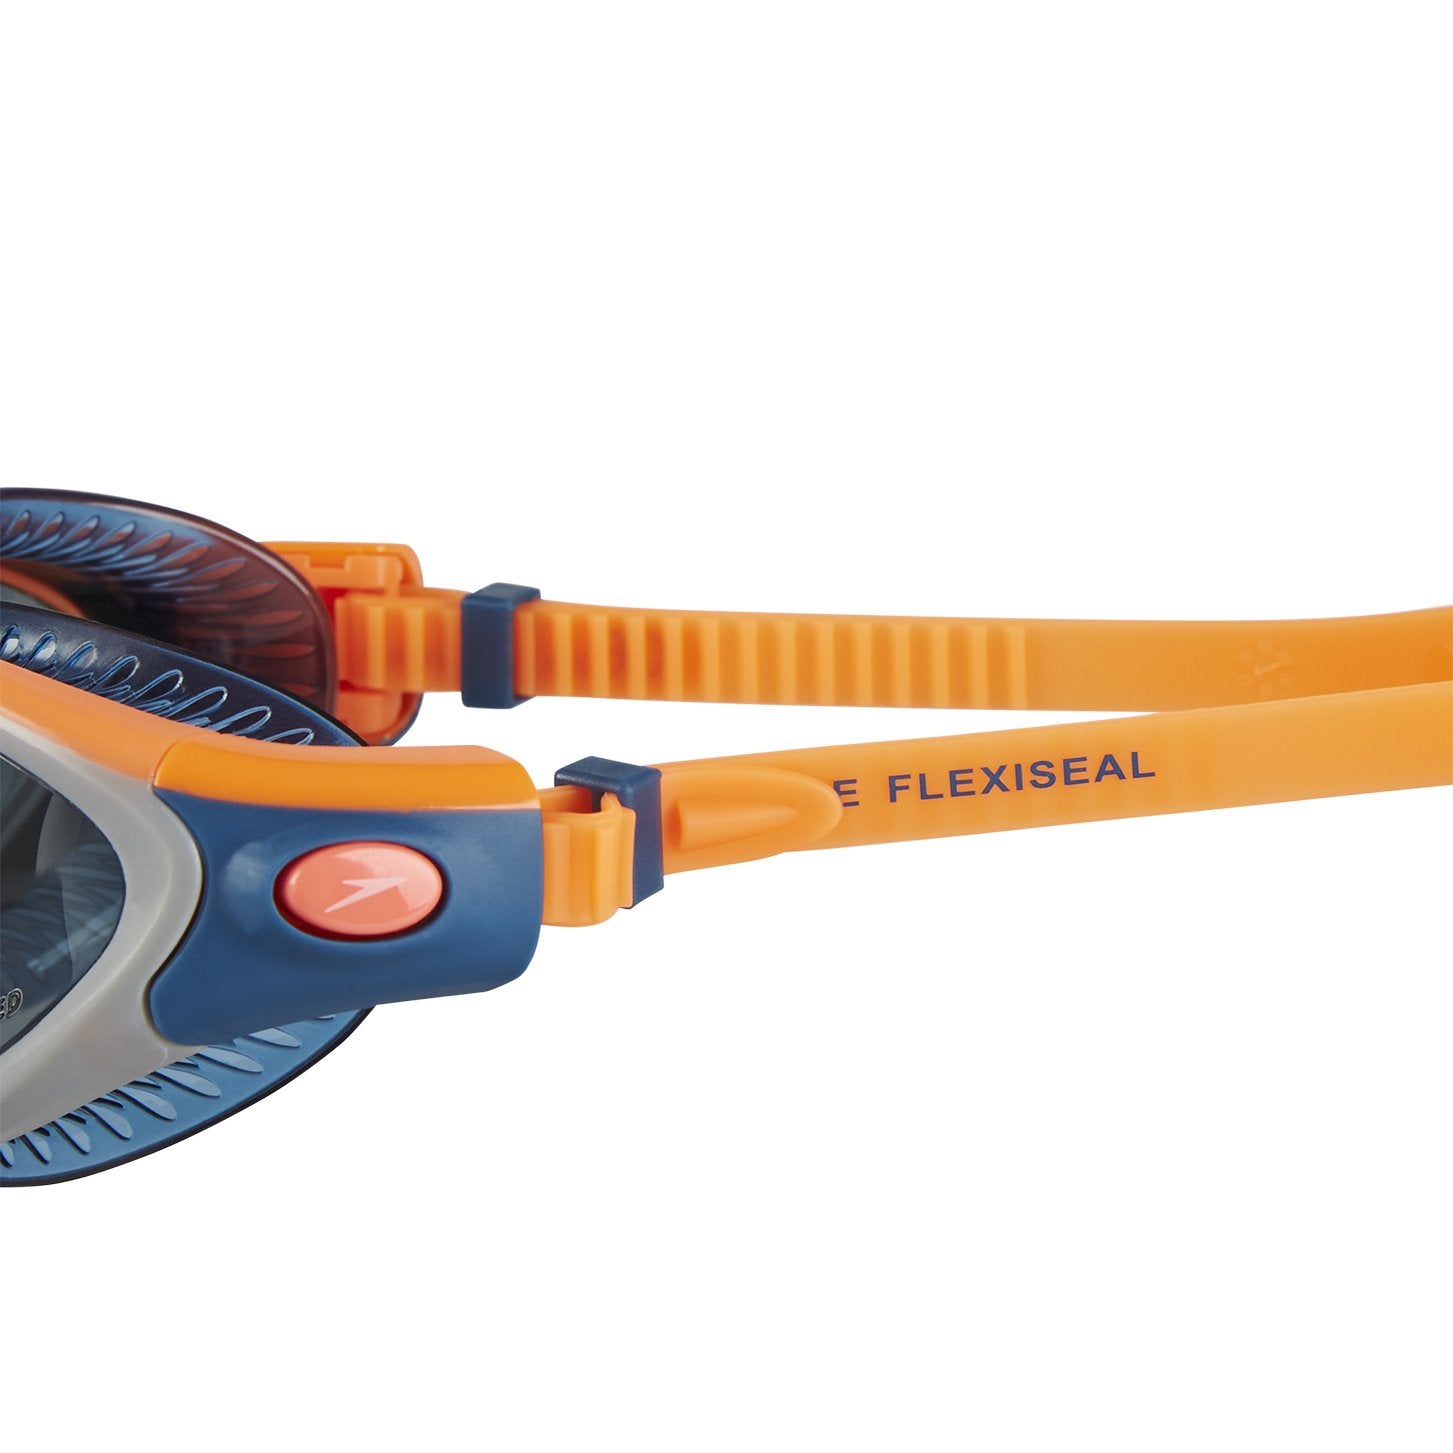 Speedo 811257B986 Blend Futura Biofuse Fseal Tri Goggle, Adult (Orange)/Smoke - Best Price online Prokicksports.com